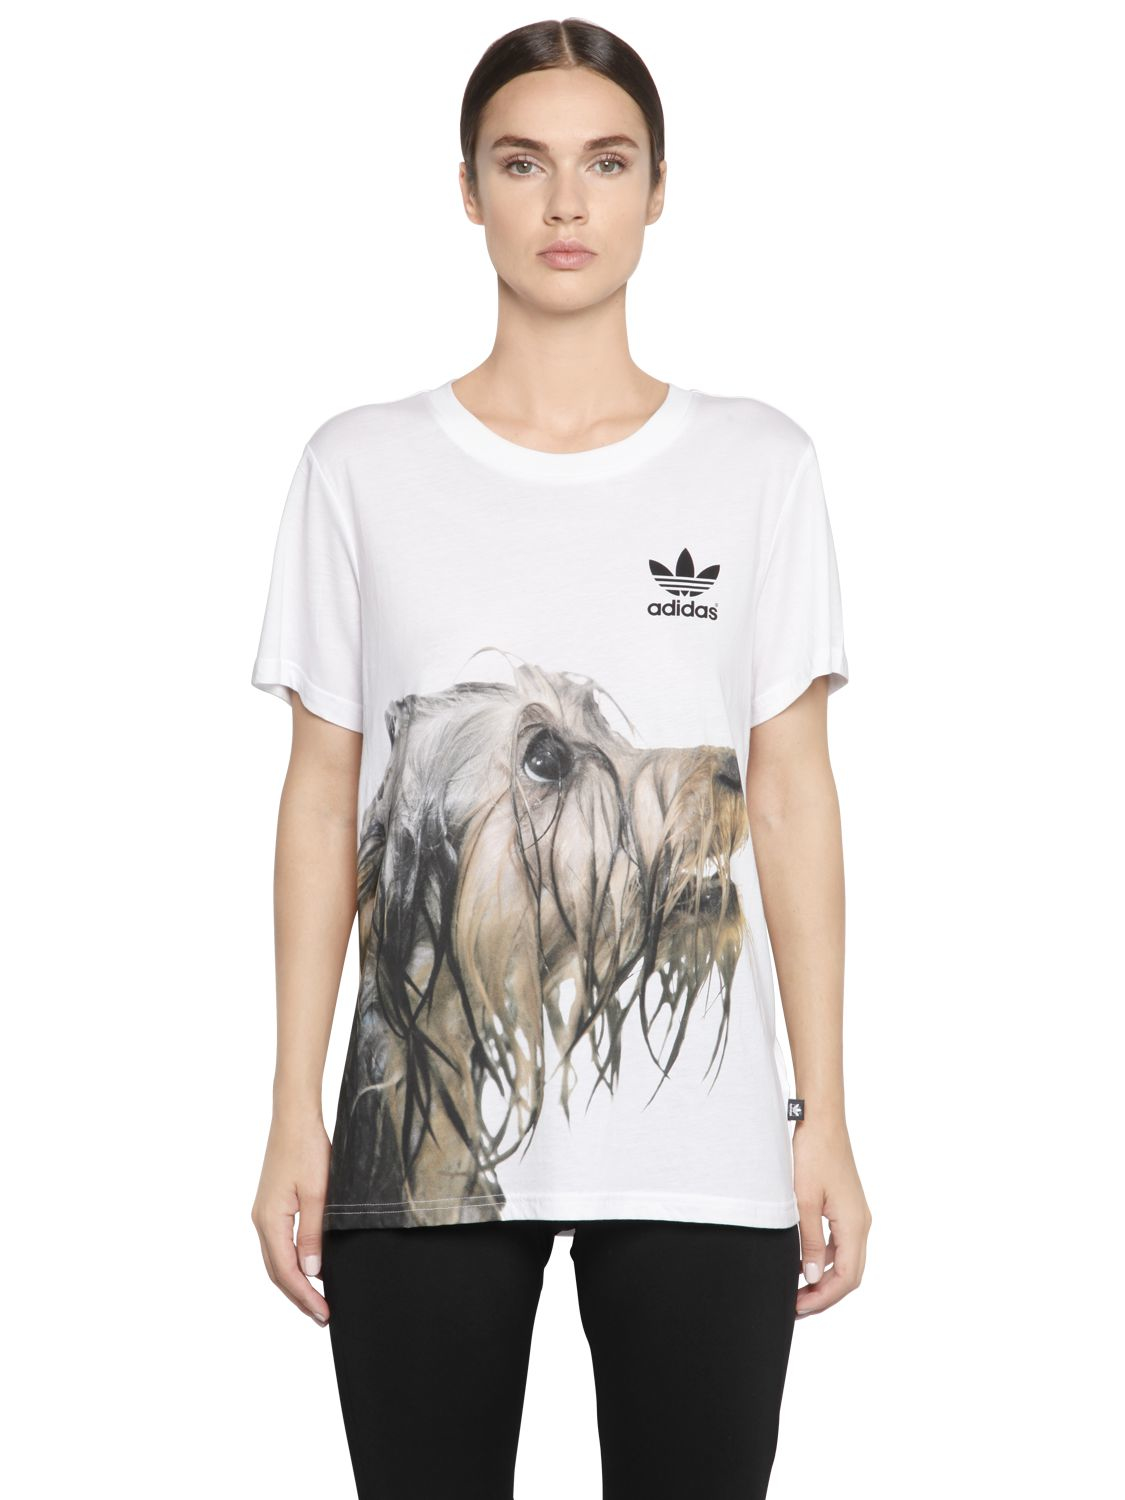 adidas Originals Wet Dog Printed Cotton Jersey T-shirt in White - Lyst